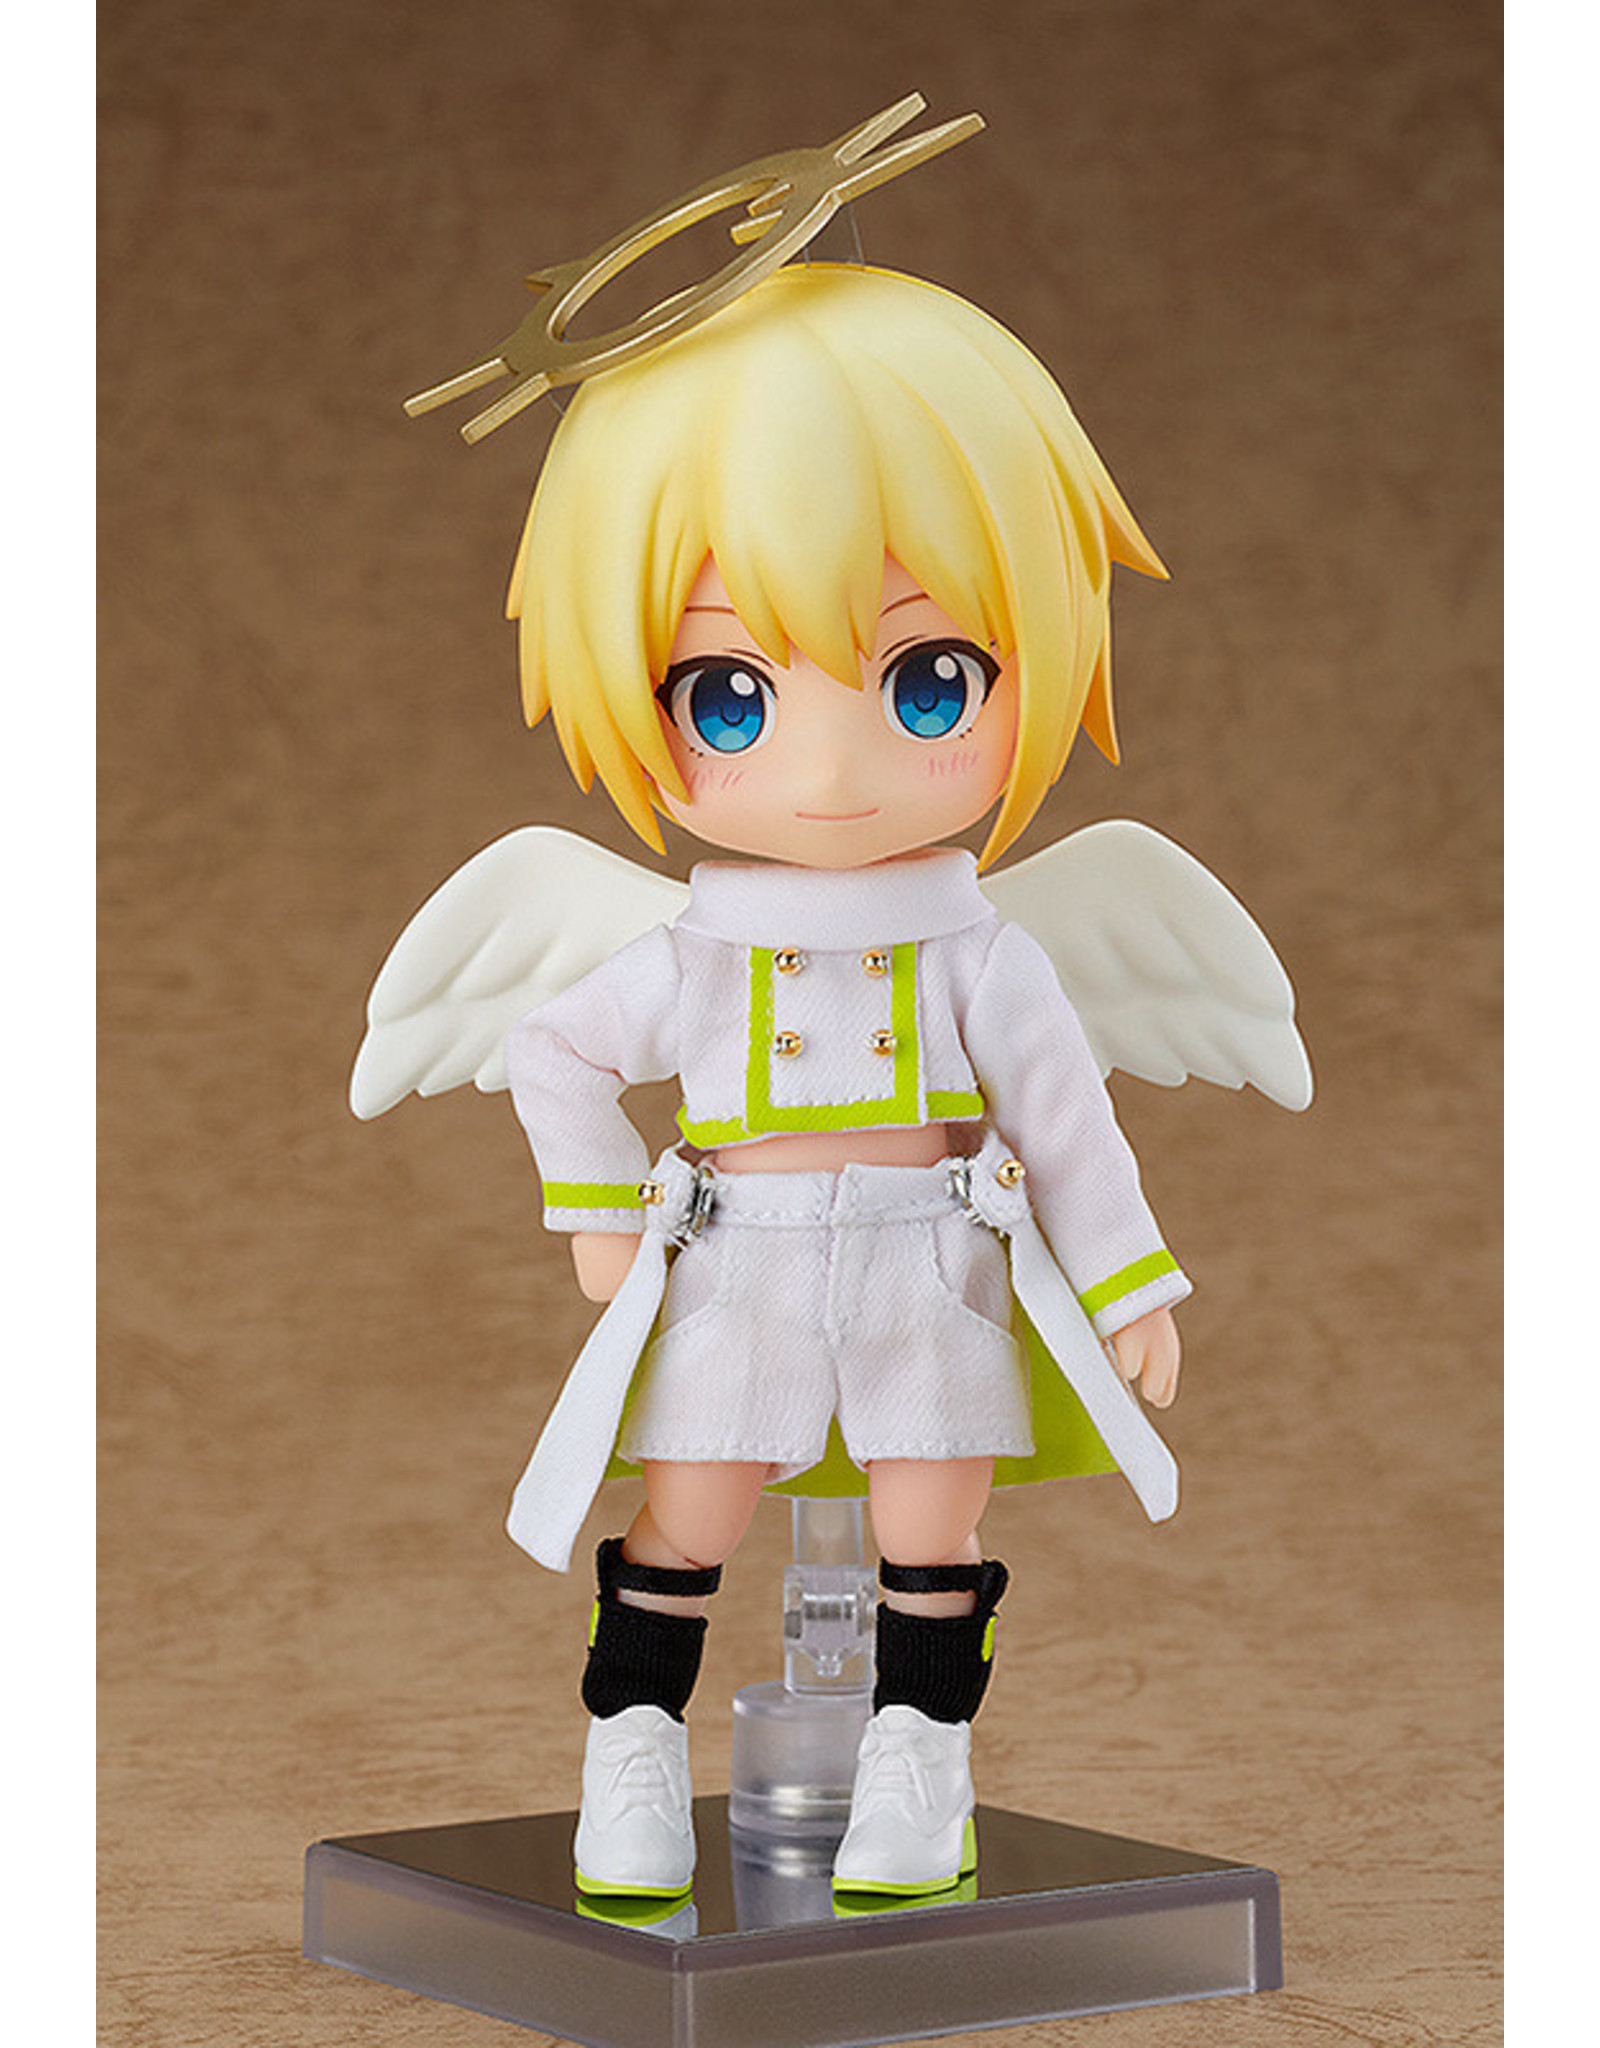 Nendoroid Doll Angel: Ciel